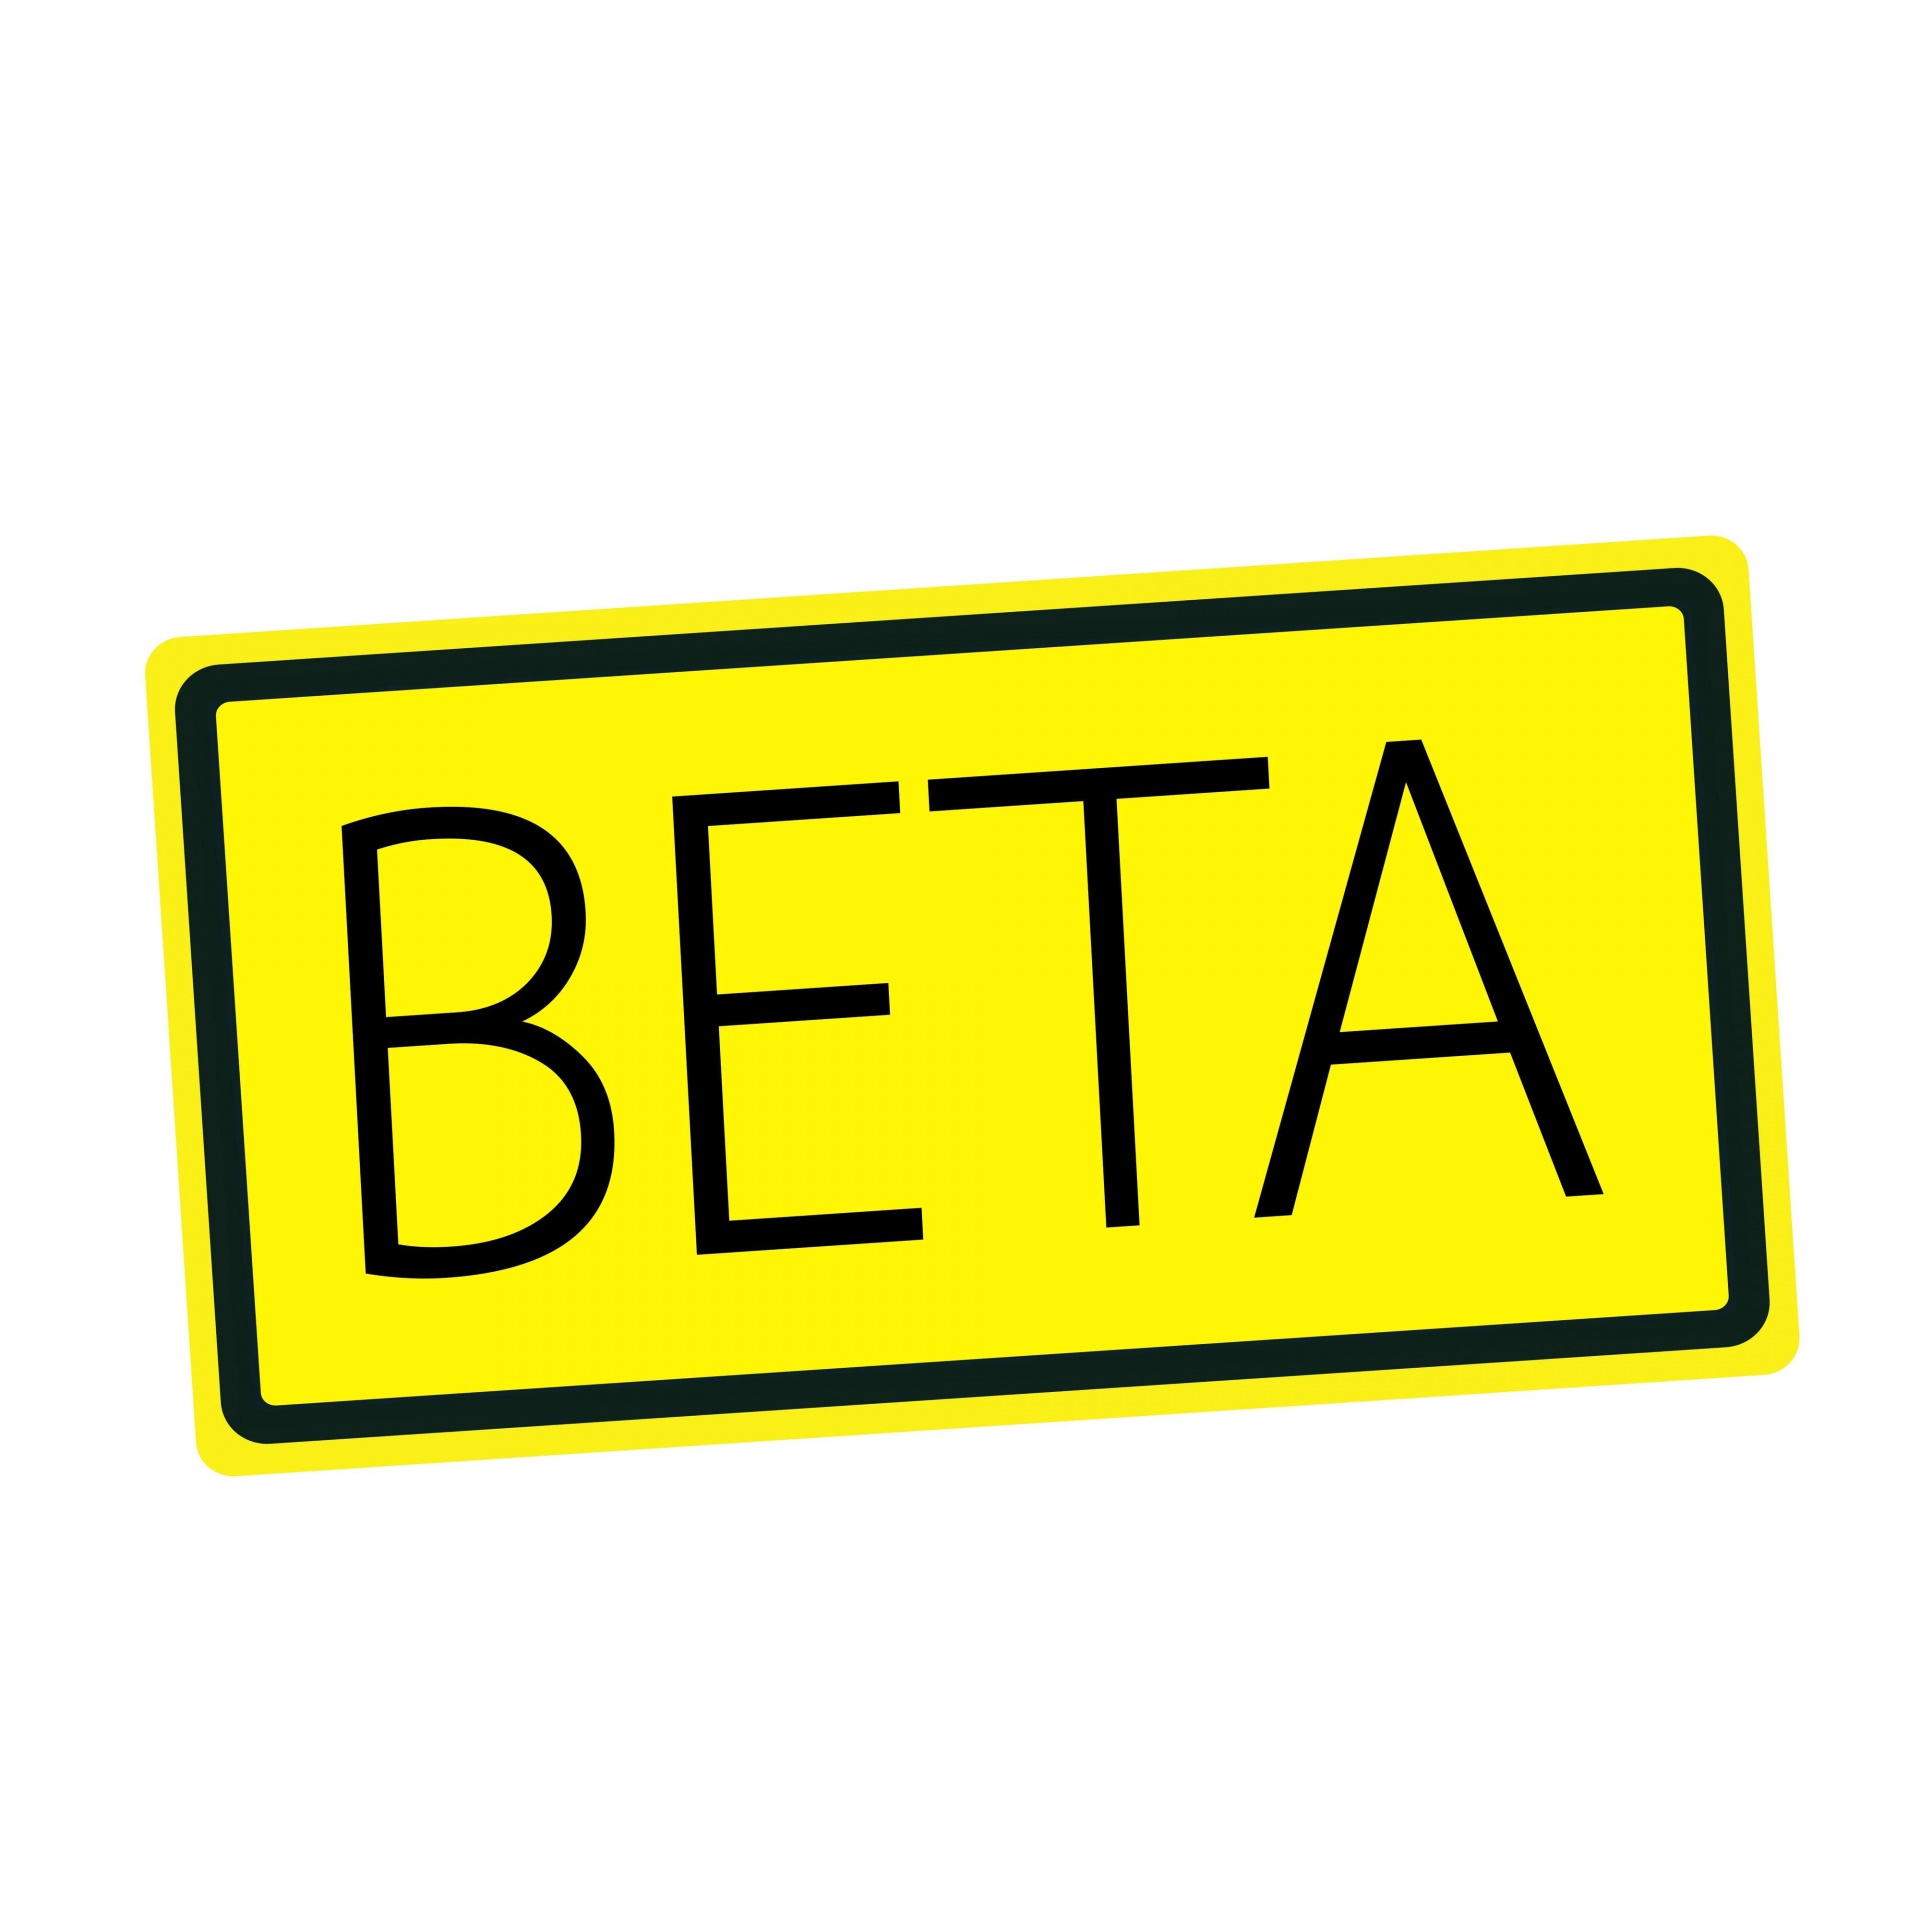 Beta Black Stamp Text On Yellow